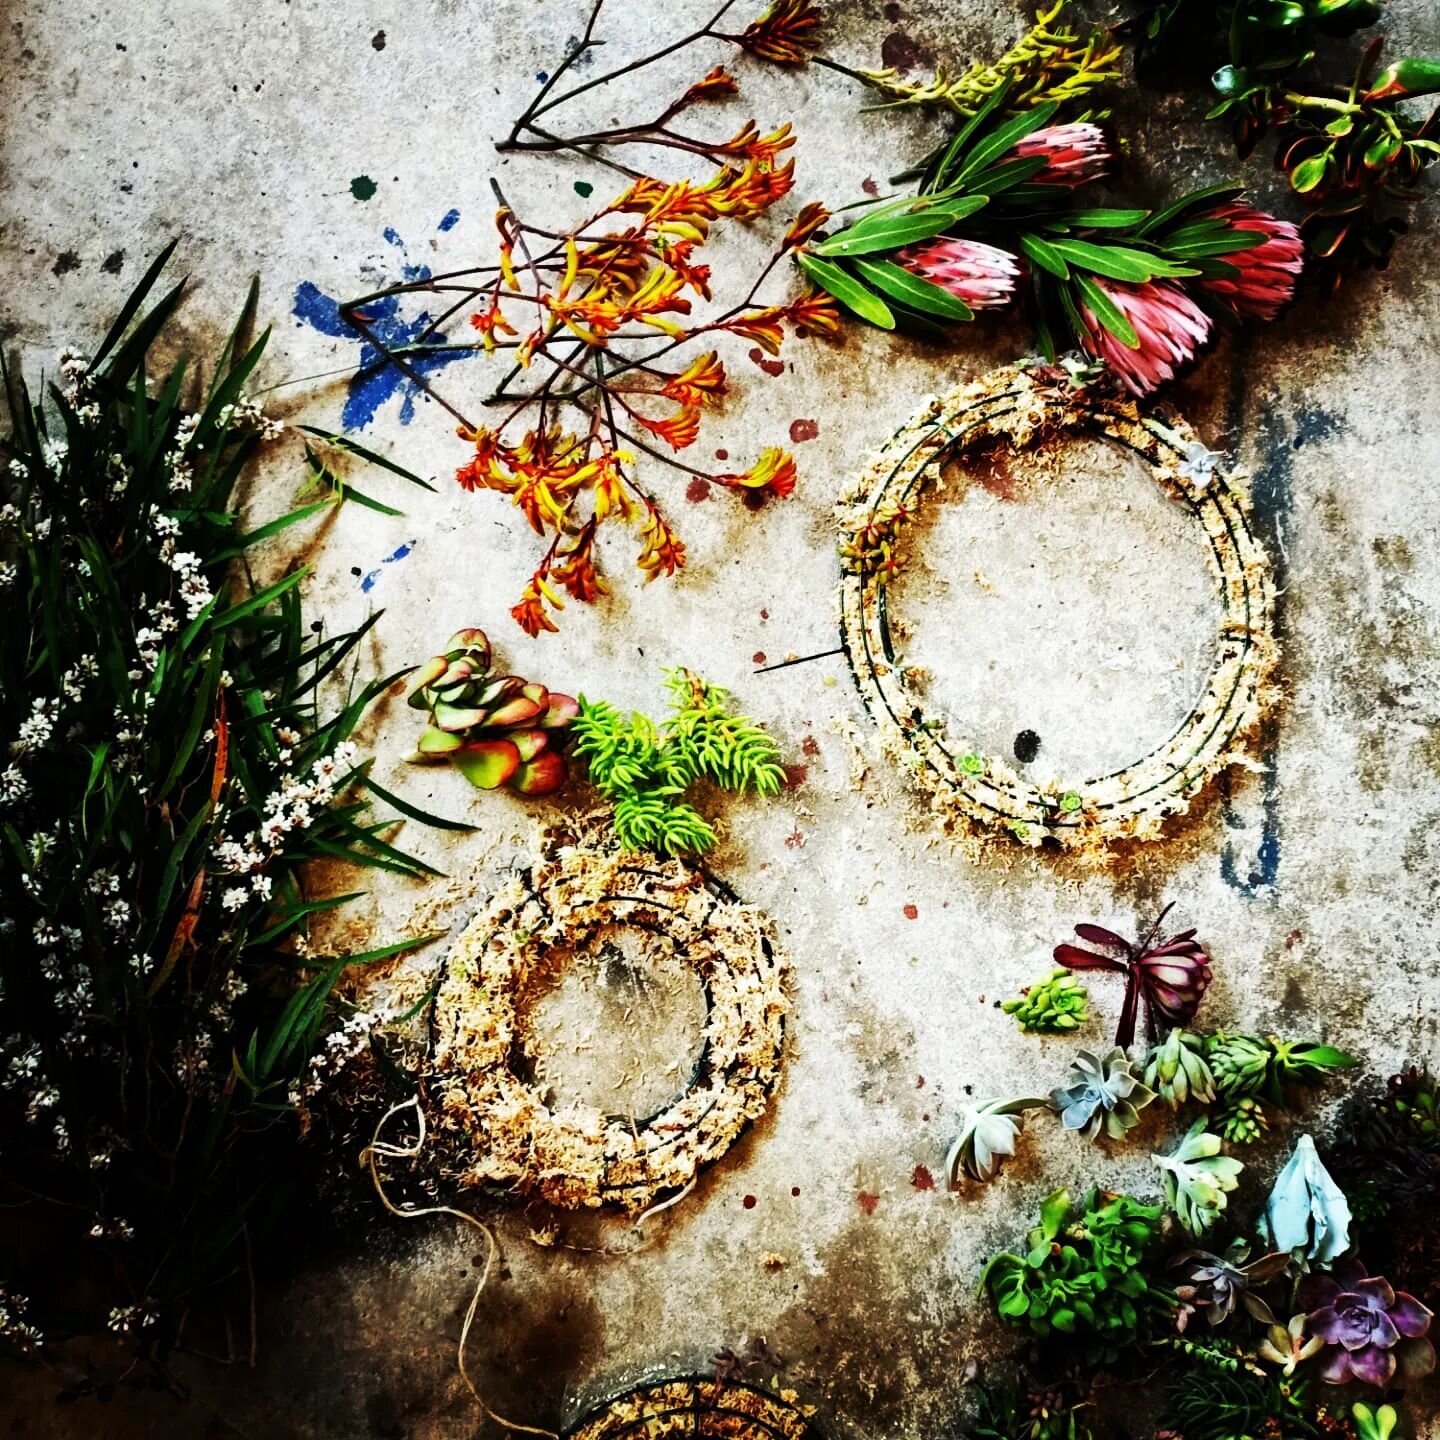 💐 Workshop Updates 💐

Succulent Xmas Wreaths @tinderboxbeachhouse 🎄

04 Dec, 10:00 am &ndash; 1:30 pm
Tinderbox Beach House, 31 Fergusson Ave, Tinderbox TAS 7054, Australia

Brighten up the festive season with your own living wreath! Join our work